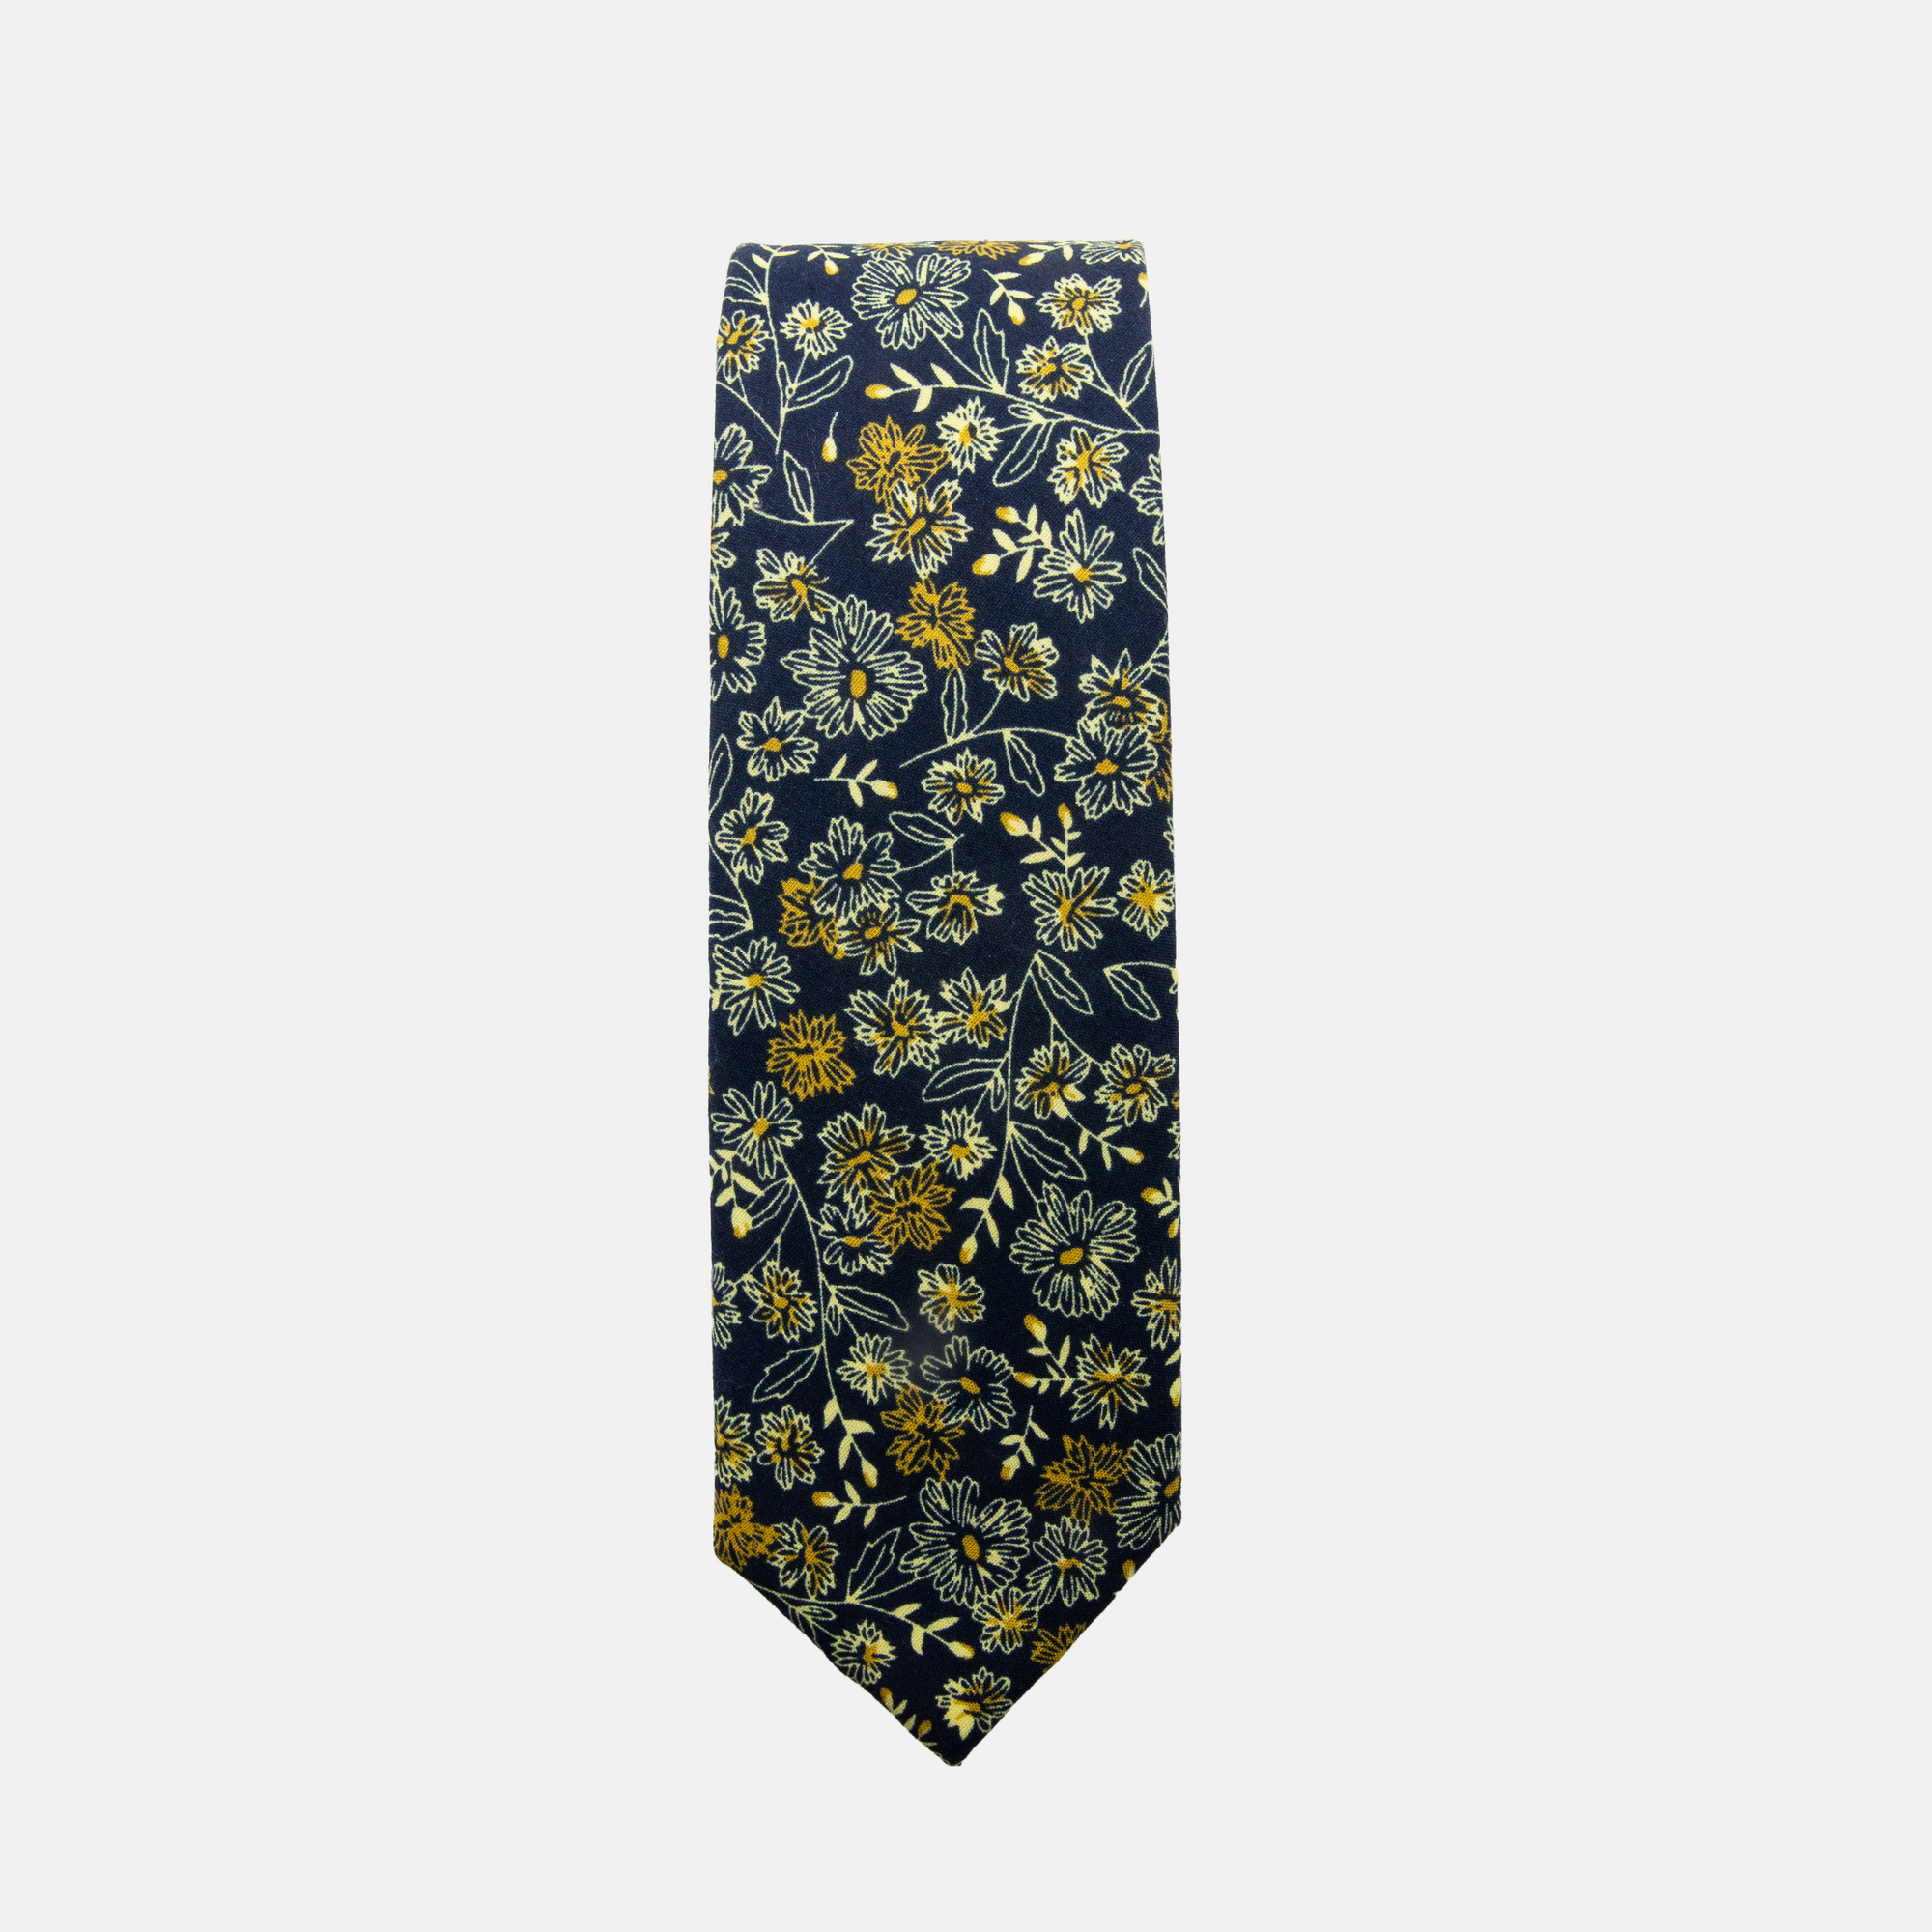 FORD - Men's Tie